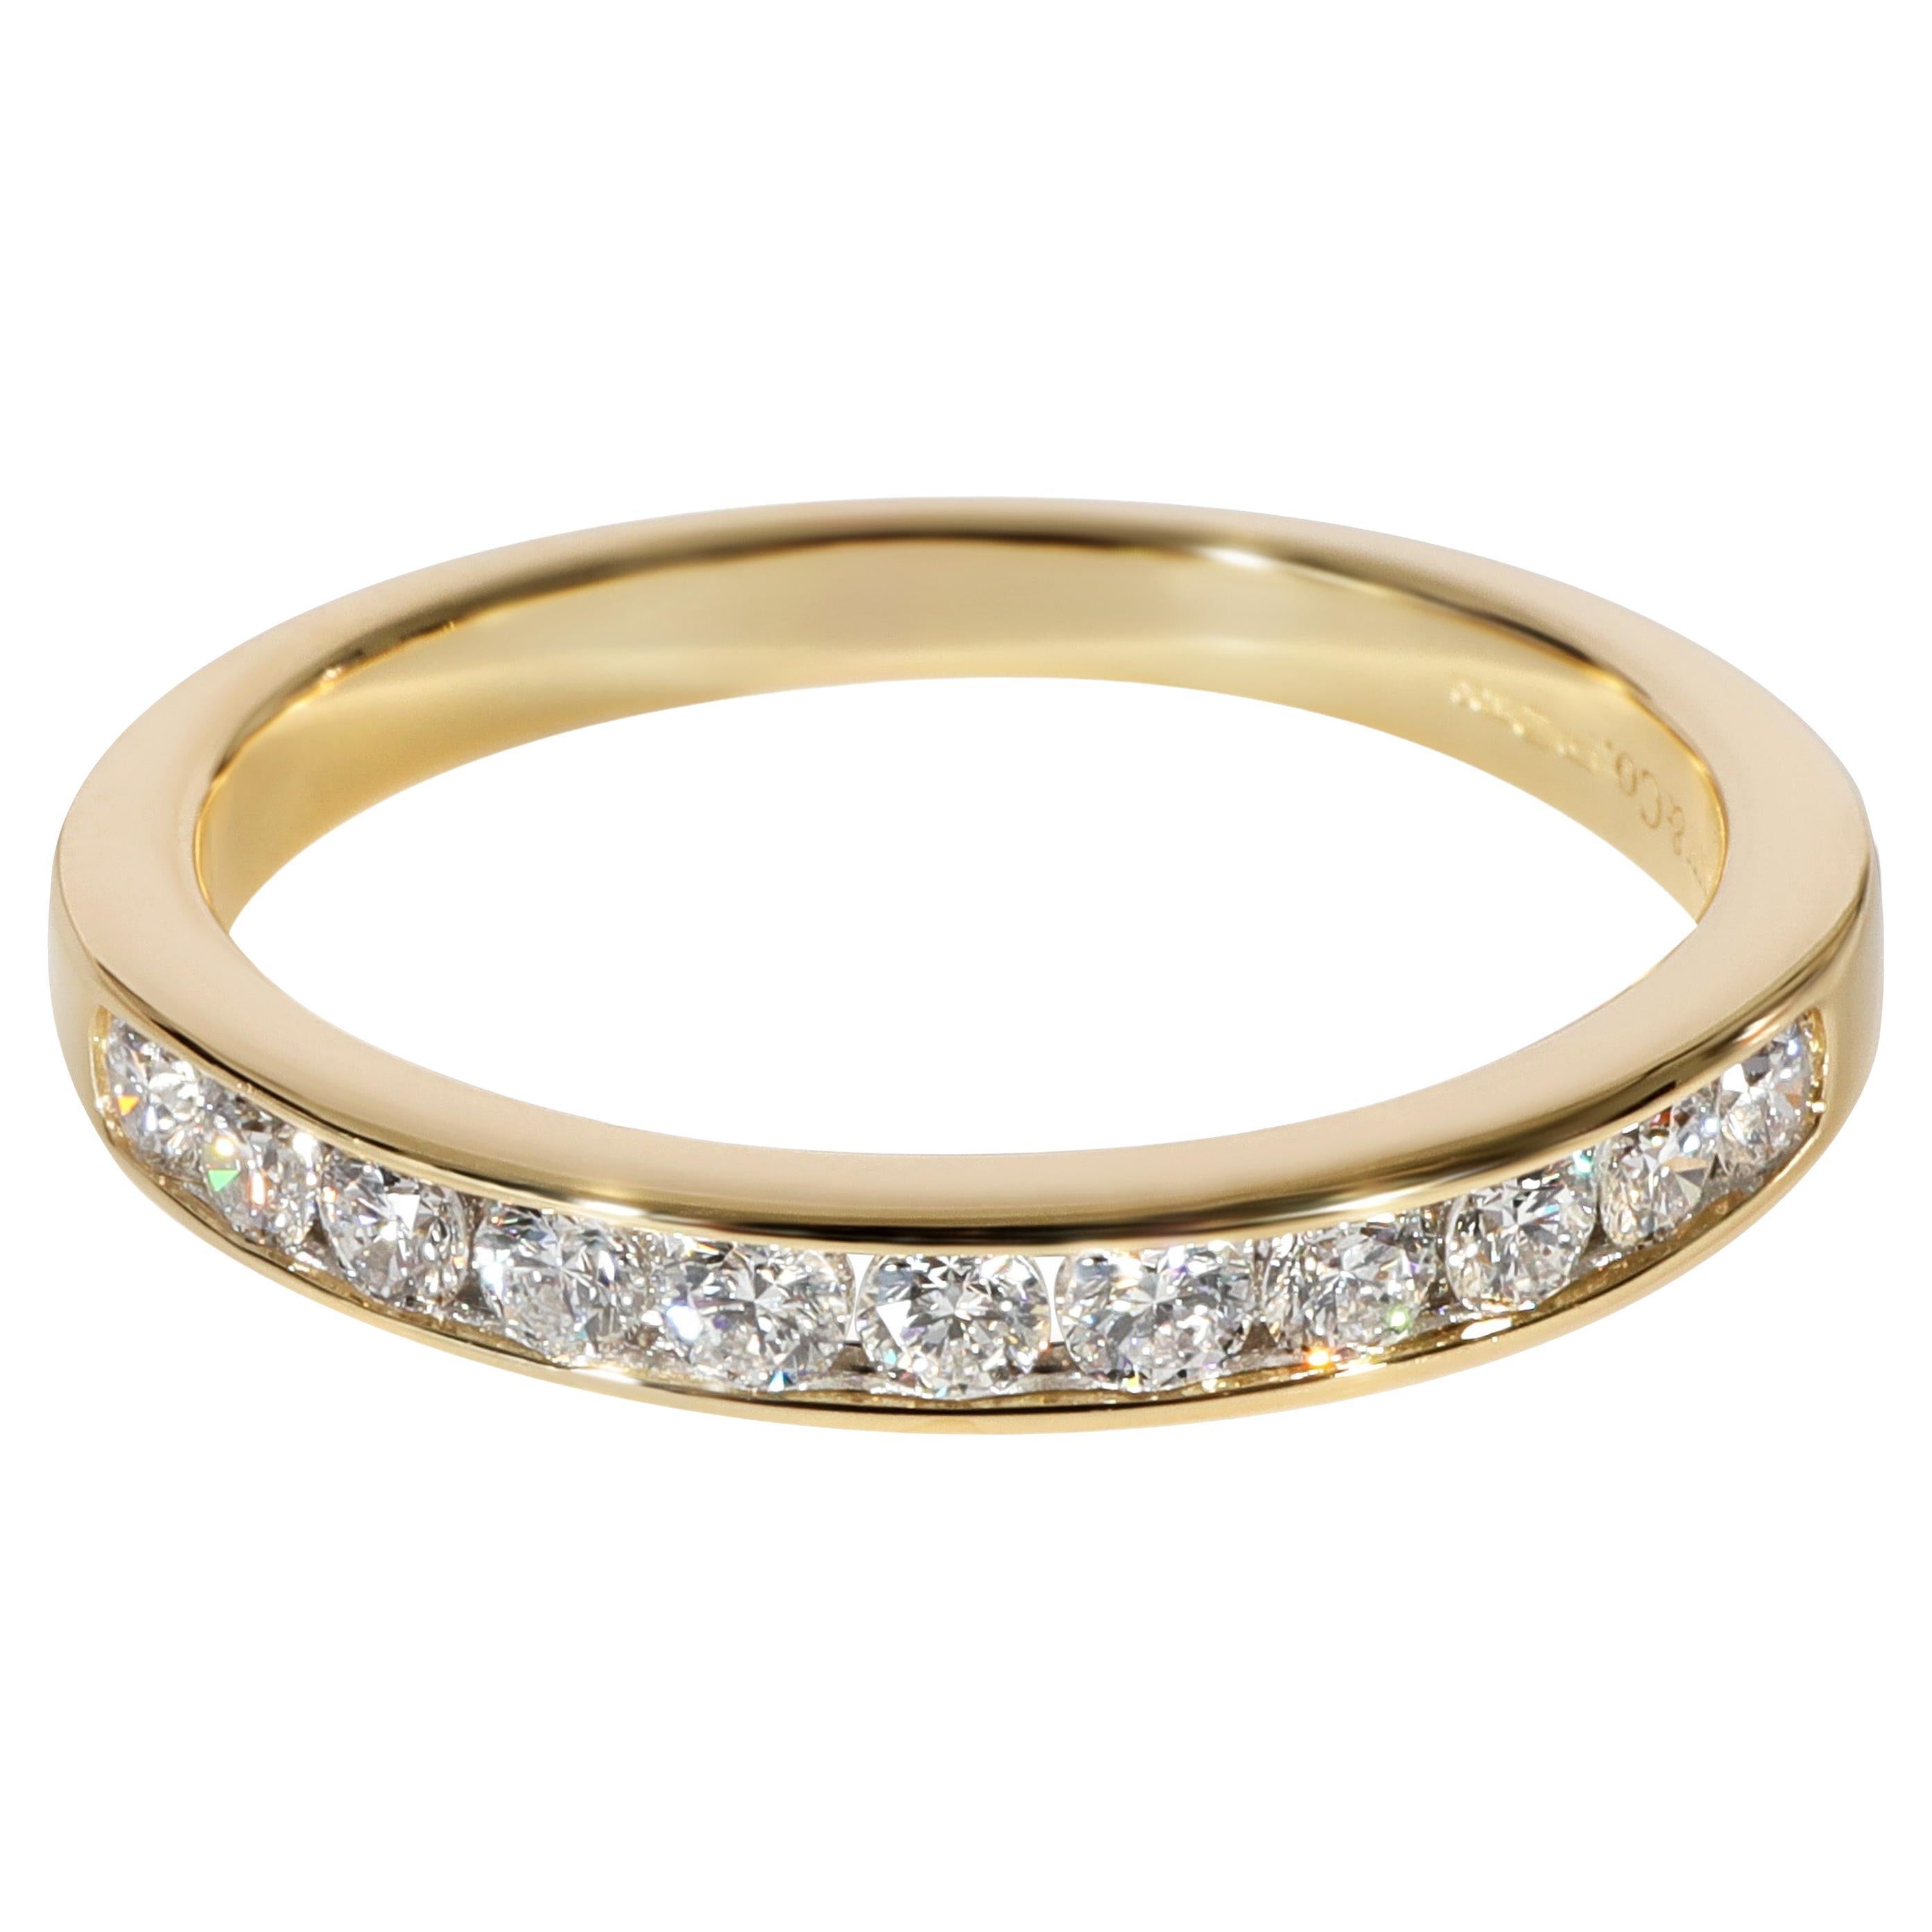 Tiffany & Co. Diamond Wedding Band in 18k Yellow Gold 0.39 Ctw